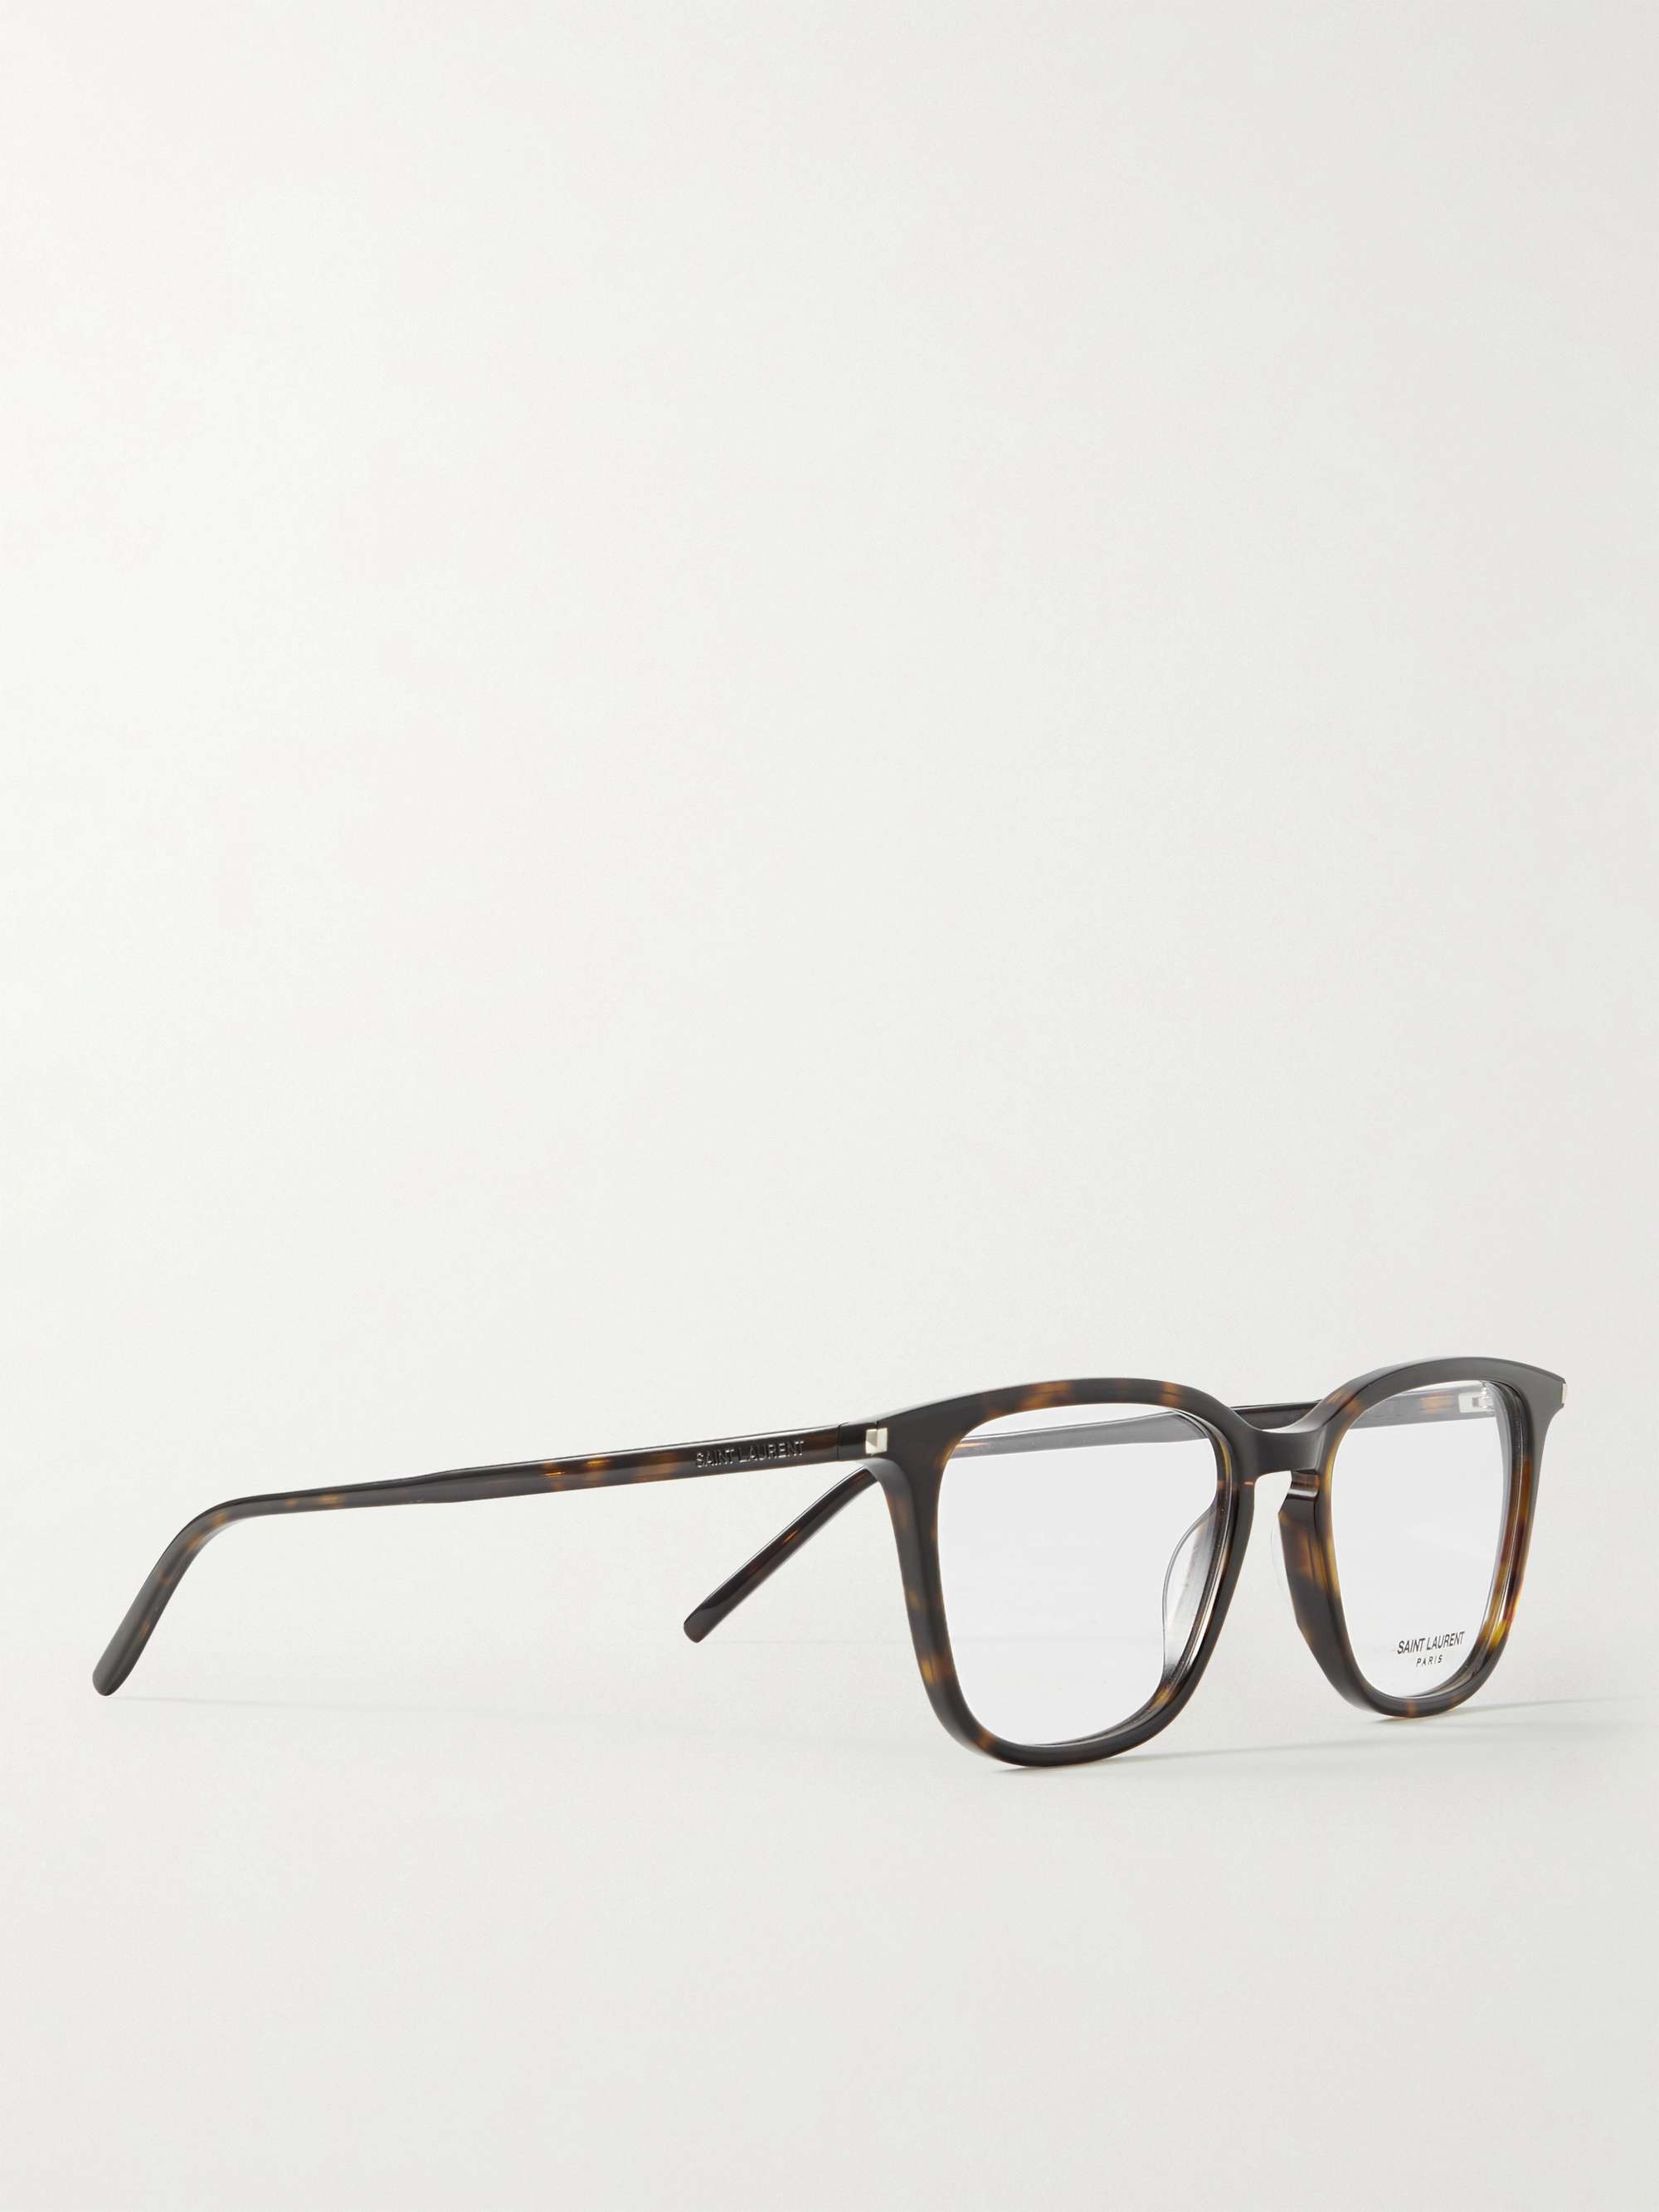 SAINT LAURENT EYEWEAR Square-Frame Tortoiseshell Acetate Optical Glasses